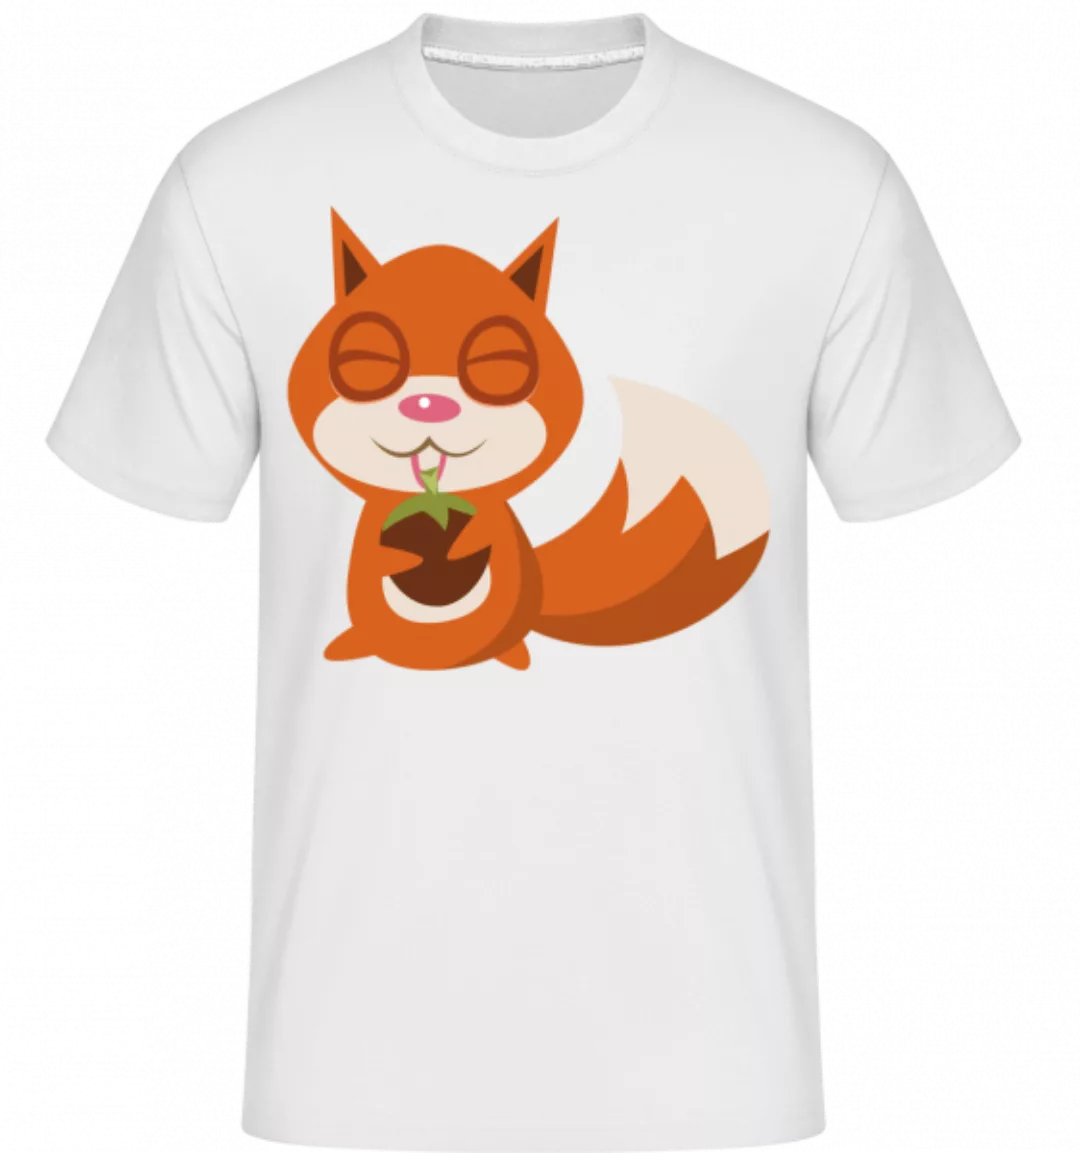 Eichhörnchen Comic · Shirtinator Männer T-Shirt günstig online kaufen